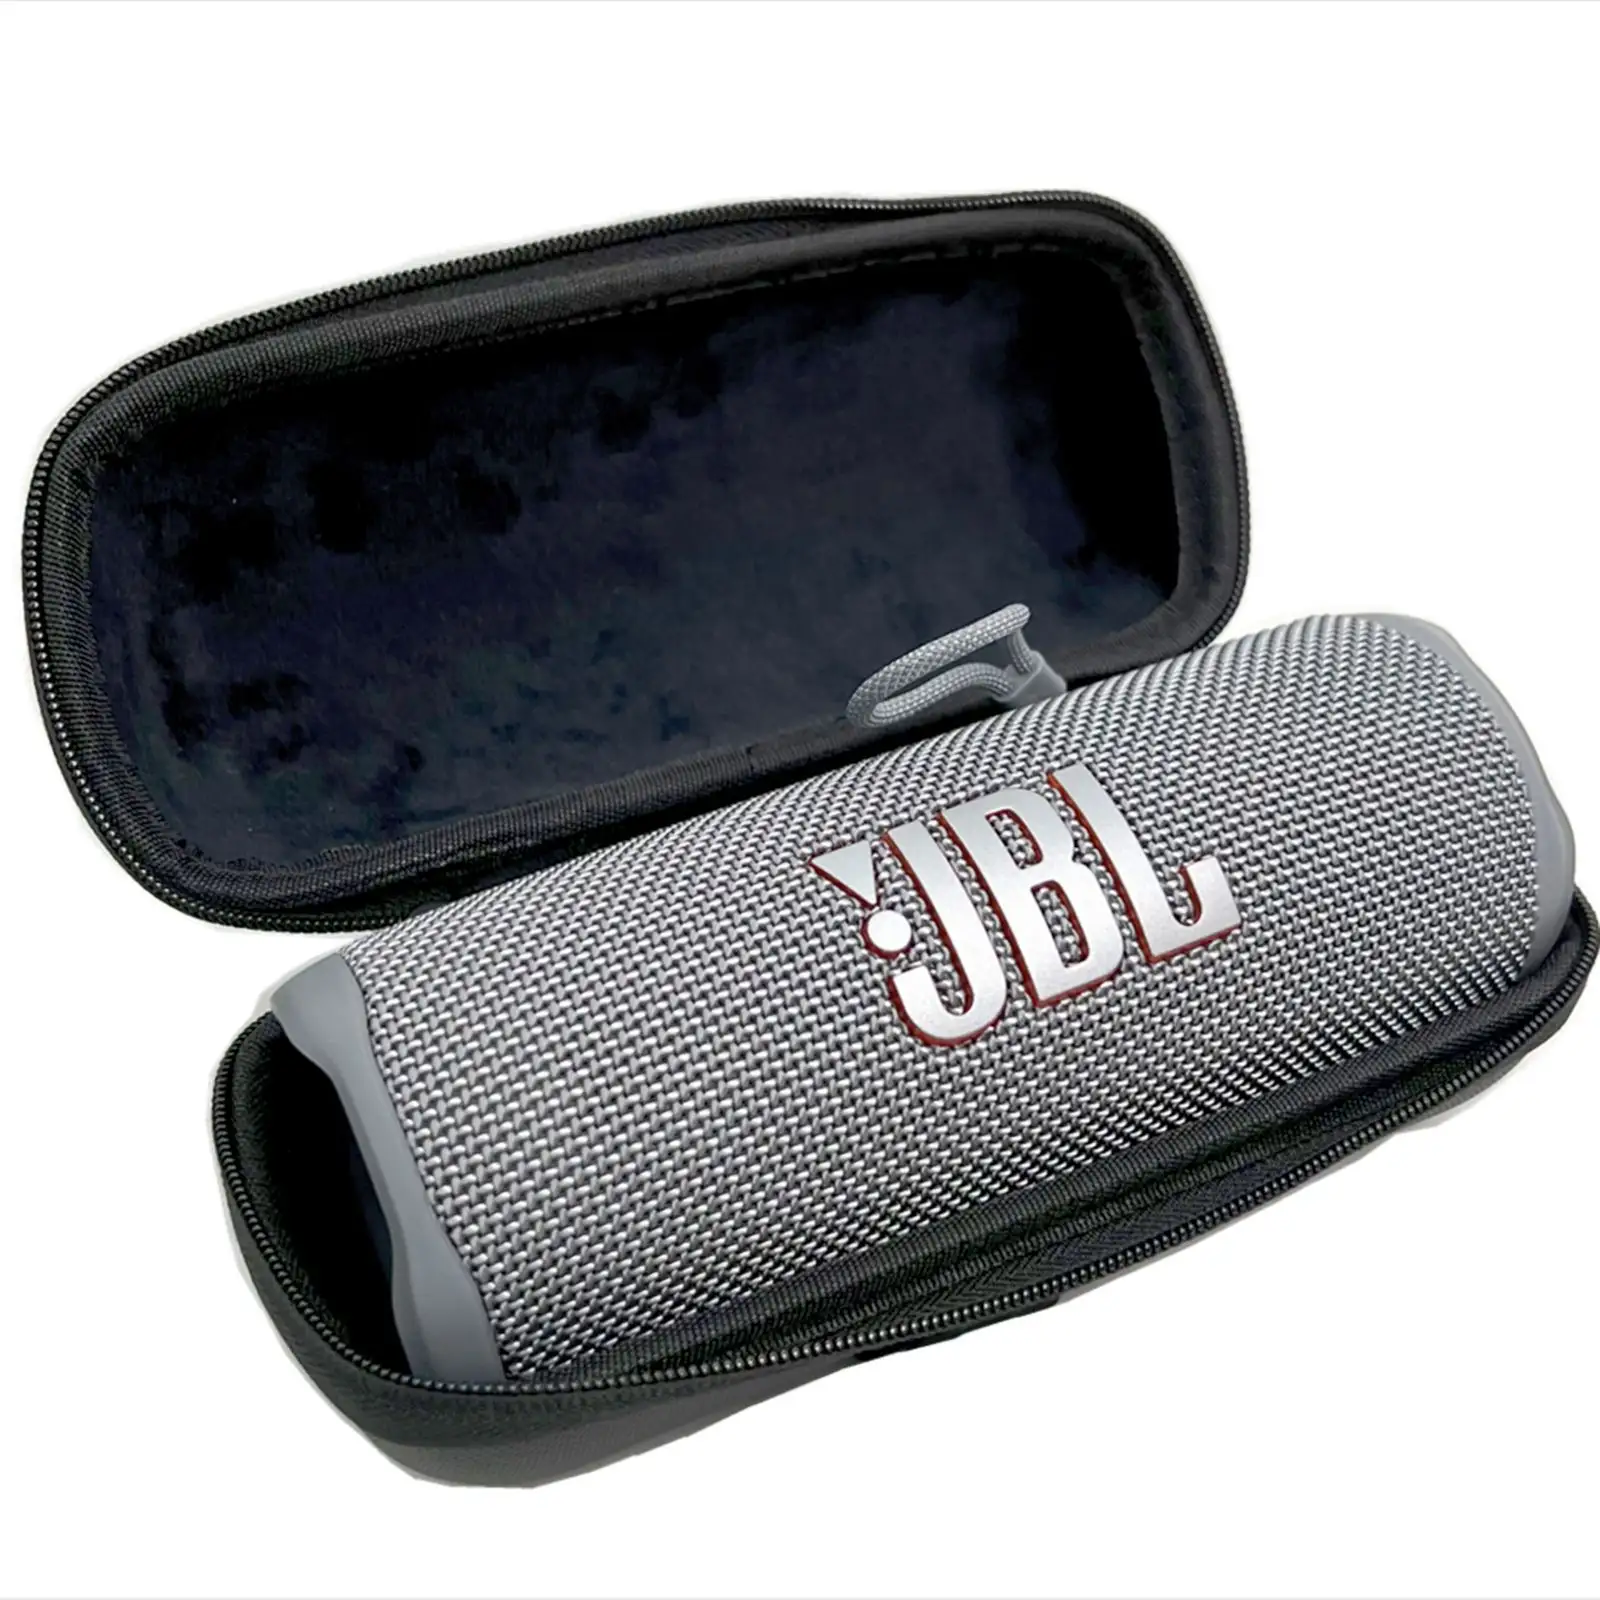 Casing pelindung Headphone portabel, tas penyimpanan Audio Bluetooth Model Universal EVA Organizer